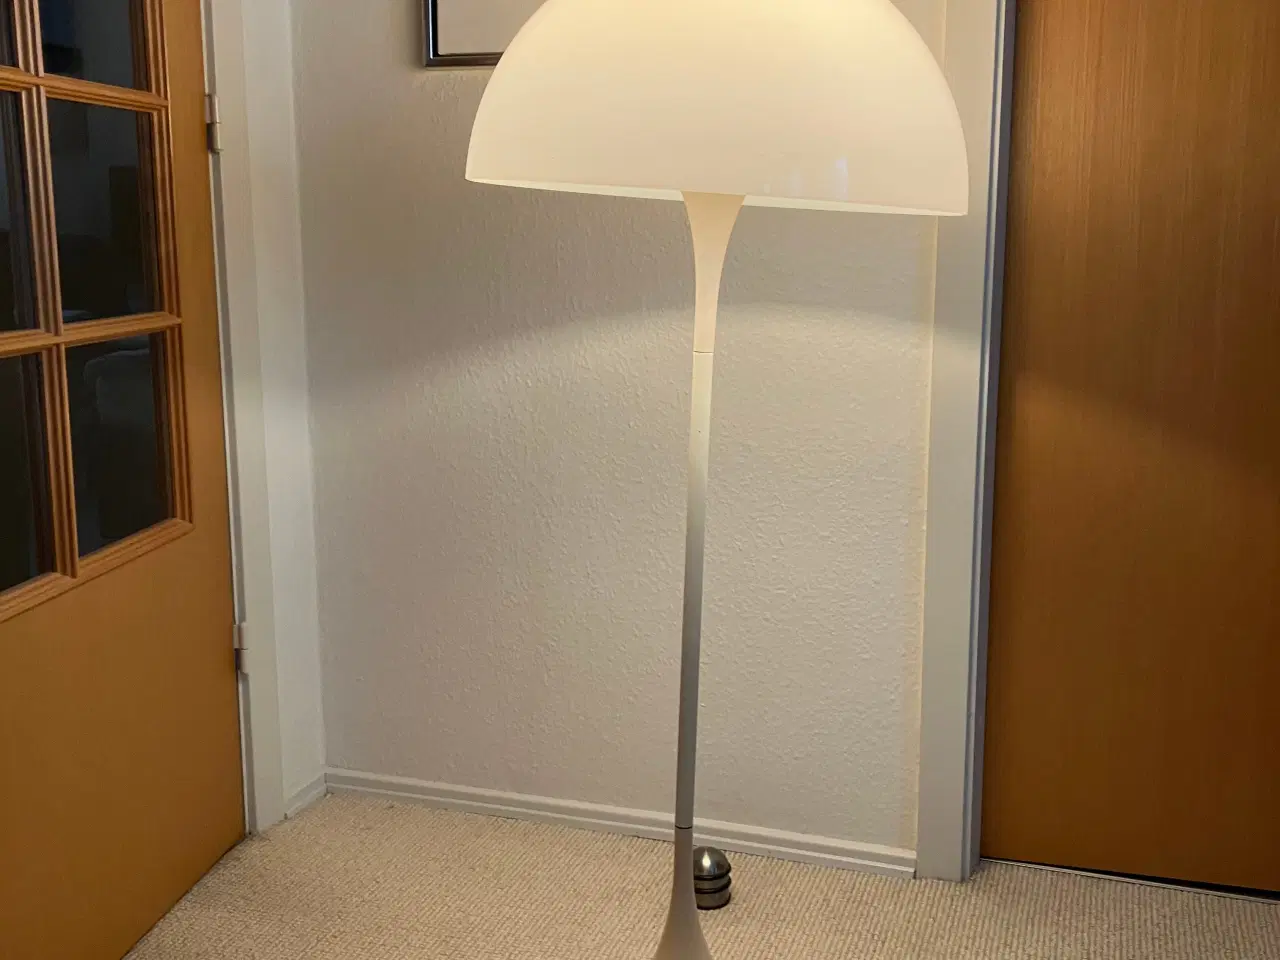 Billede 1 - Panton gulvlampe